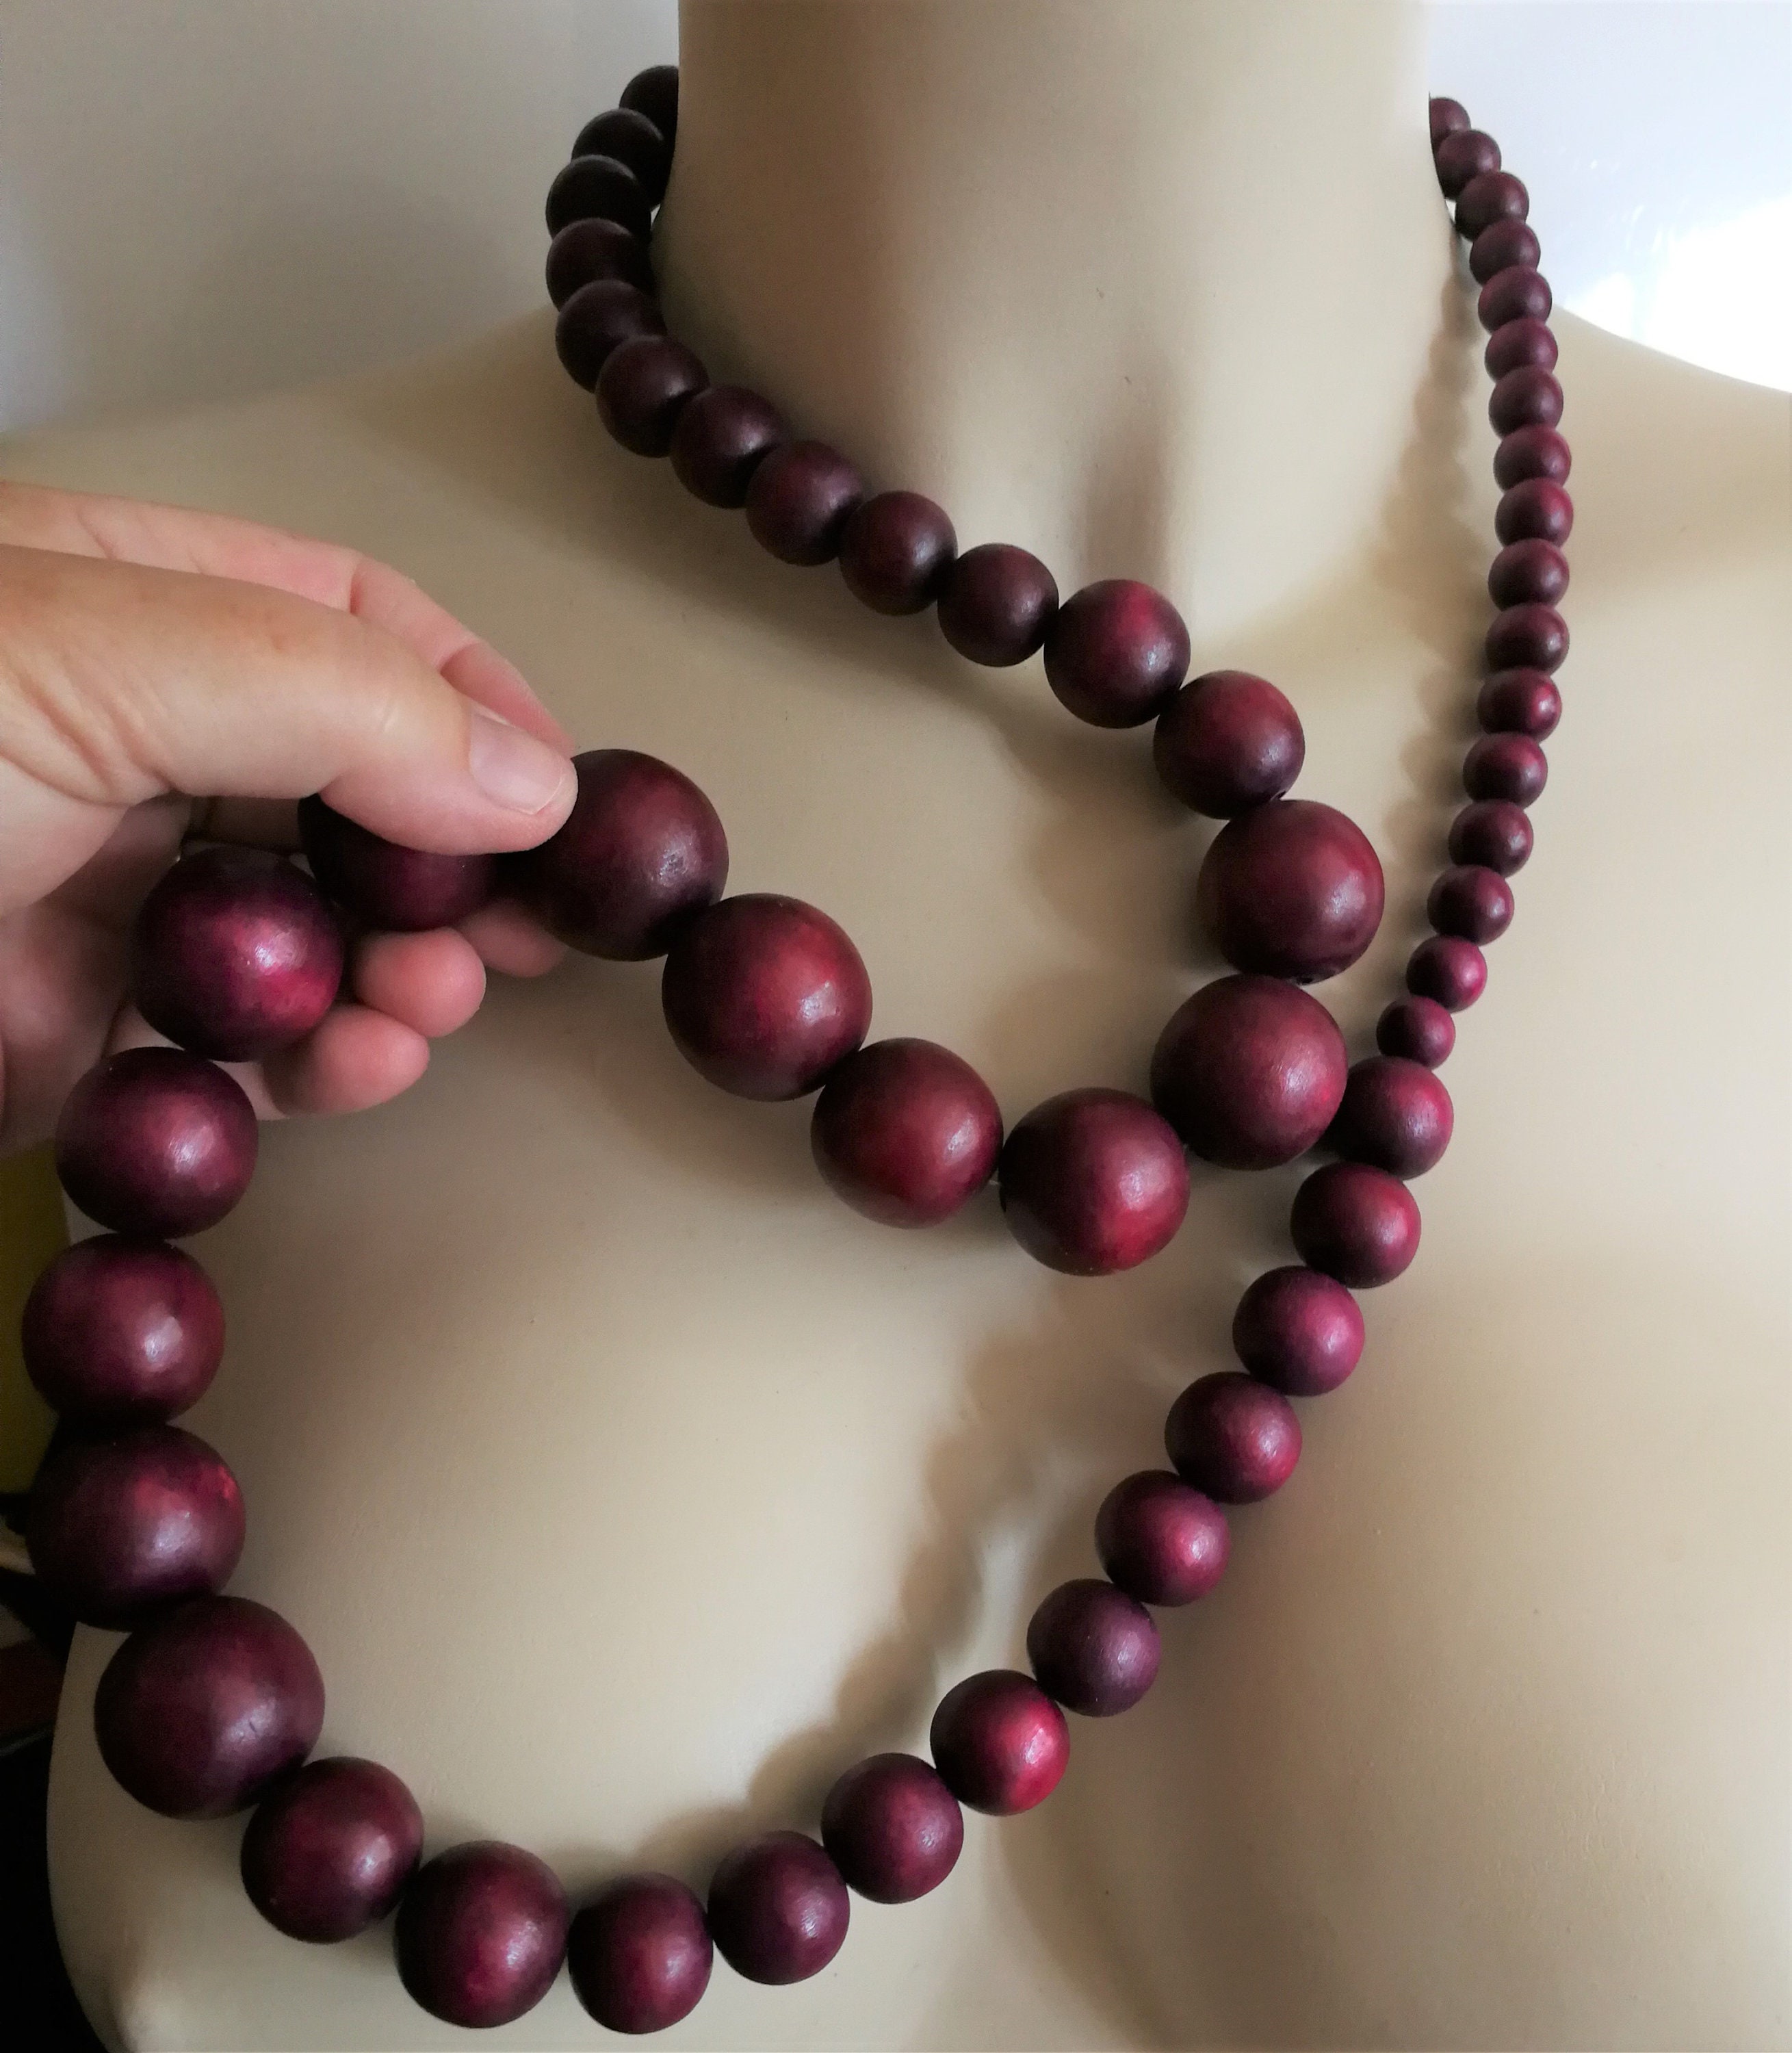 Teal and Wood Beads, Decorative Beads, Farmhouse Beads, Wood Bead